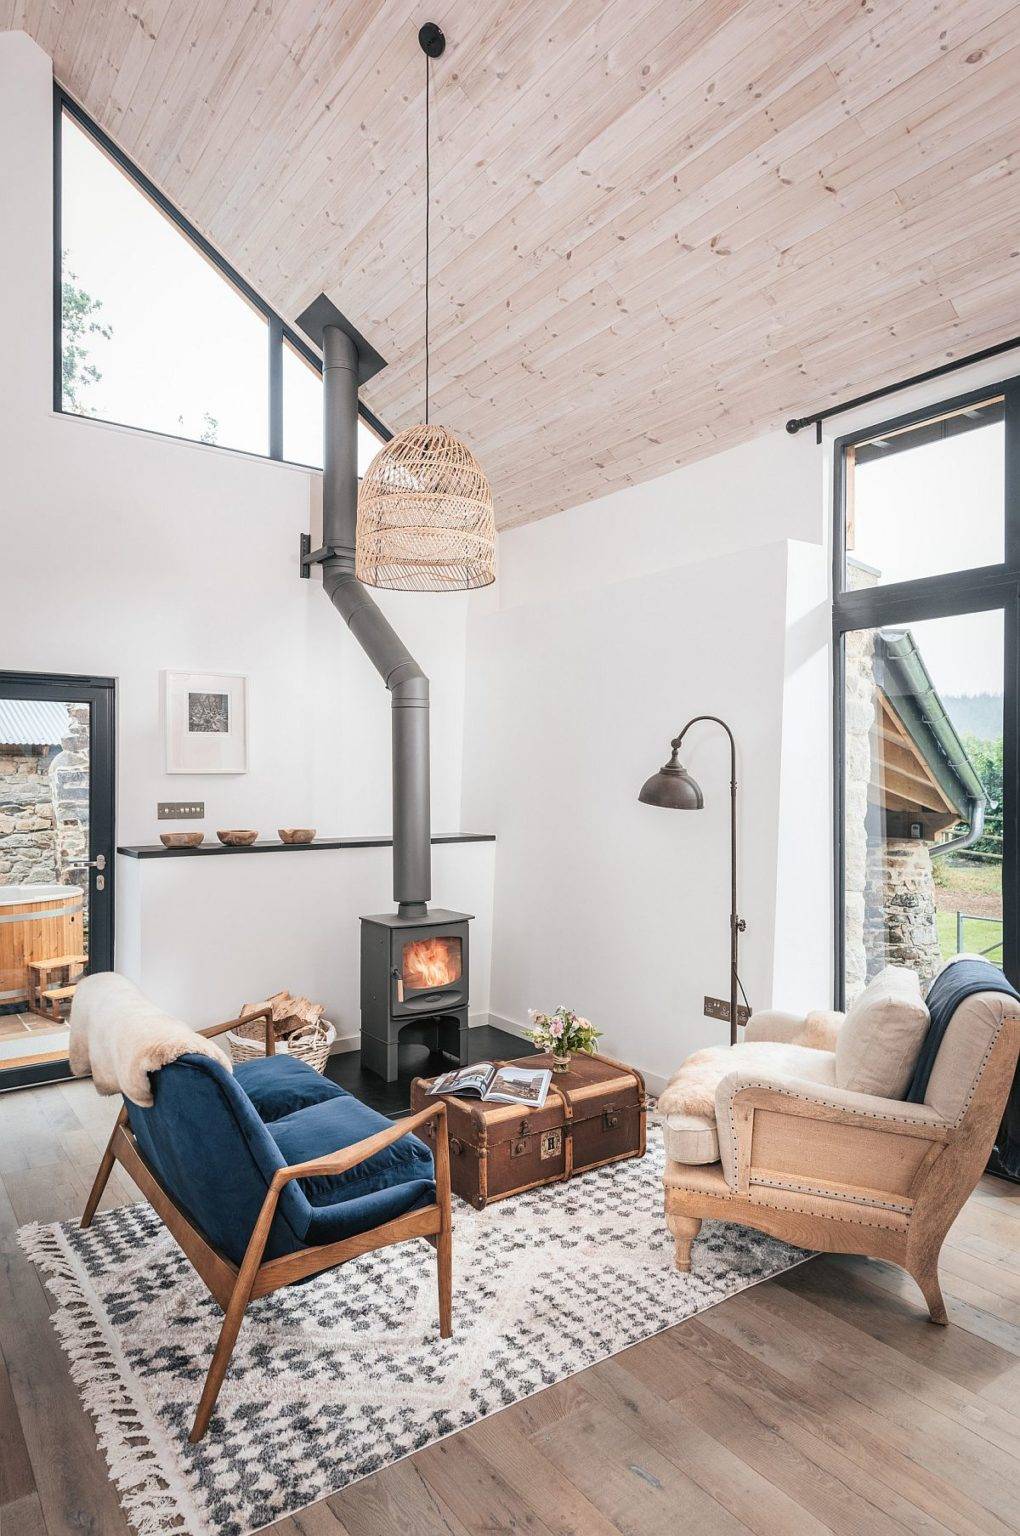 Farmhouse Living Room Design Guide: Tips, Ideas and Inspirations | Decoist